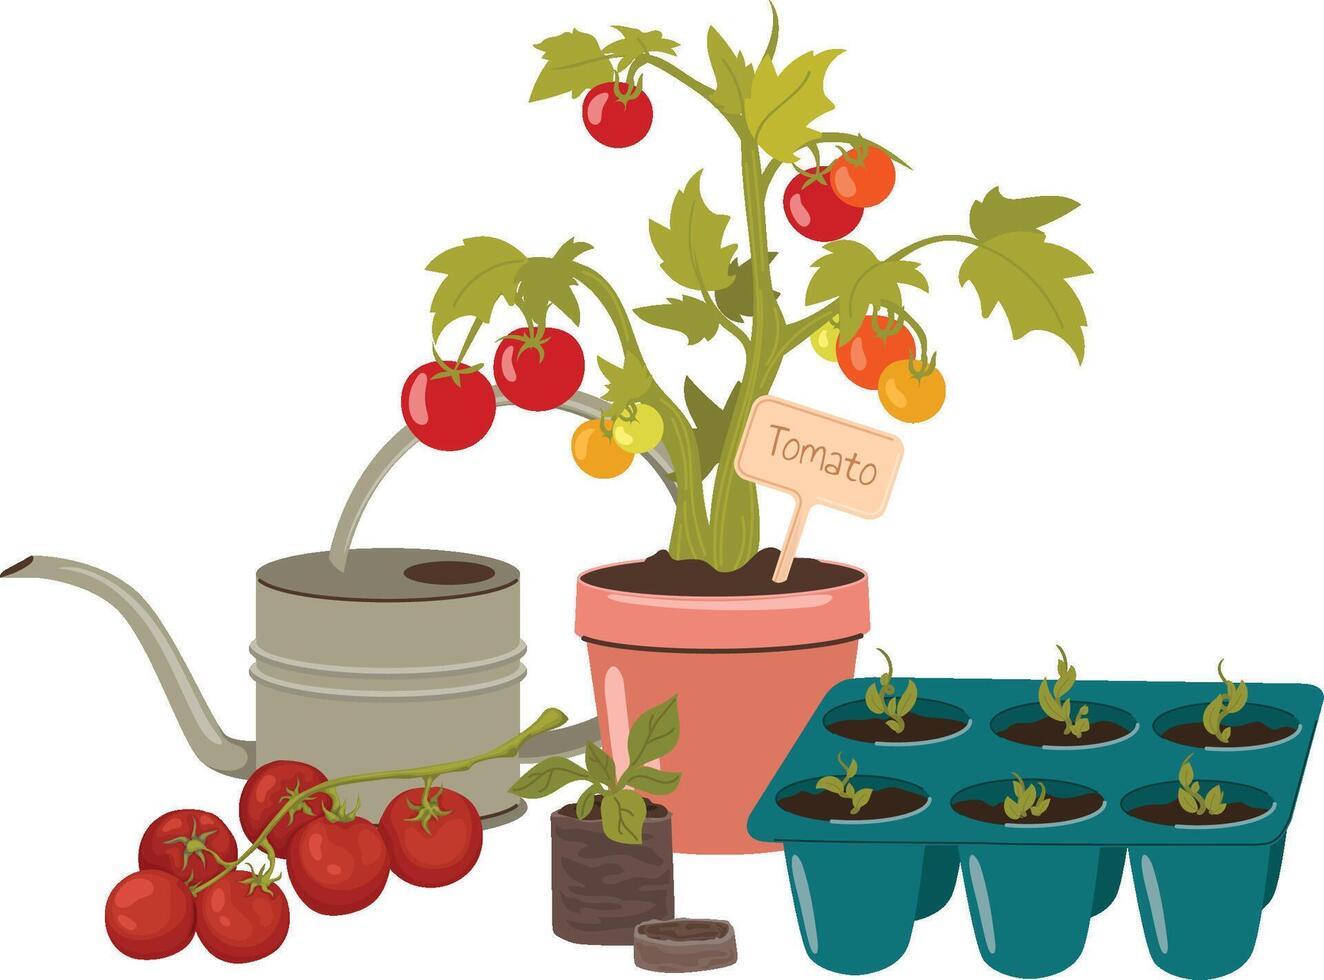 Garden composition growing tomatoes, gardening vector